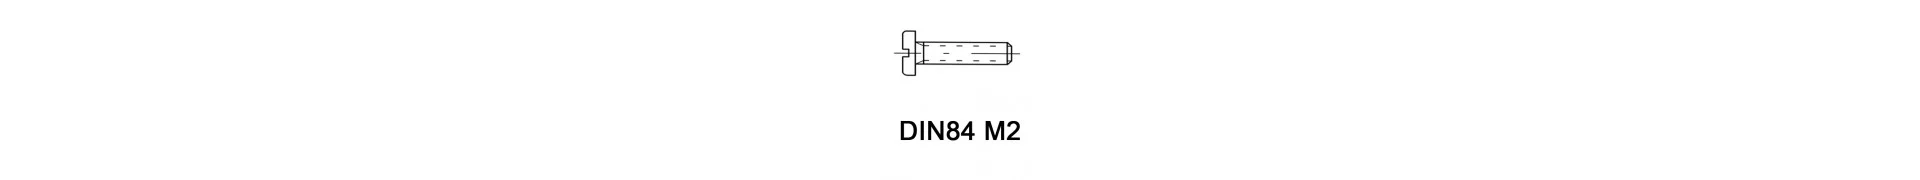 DIN84 M2